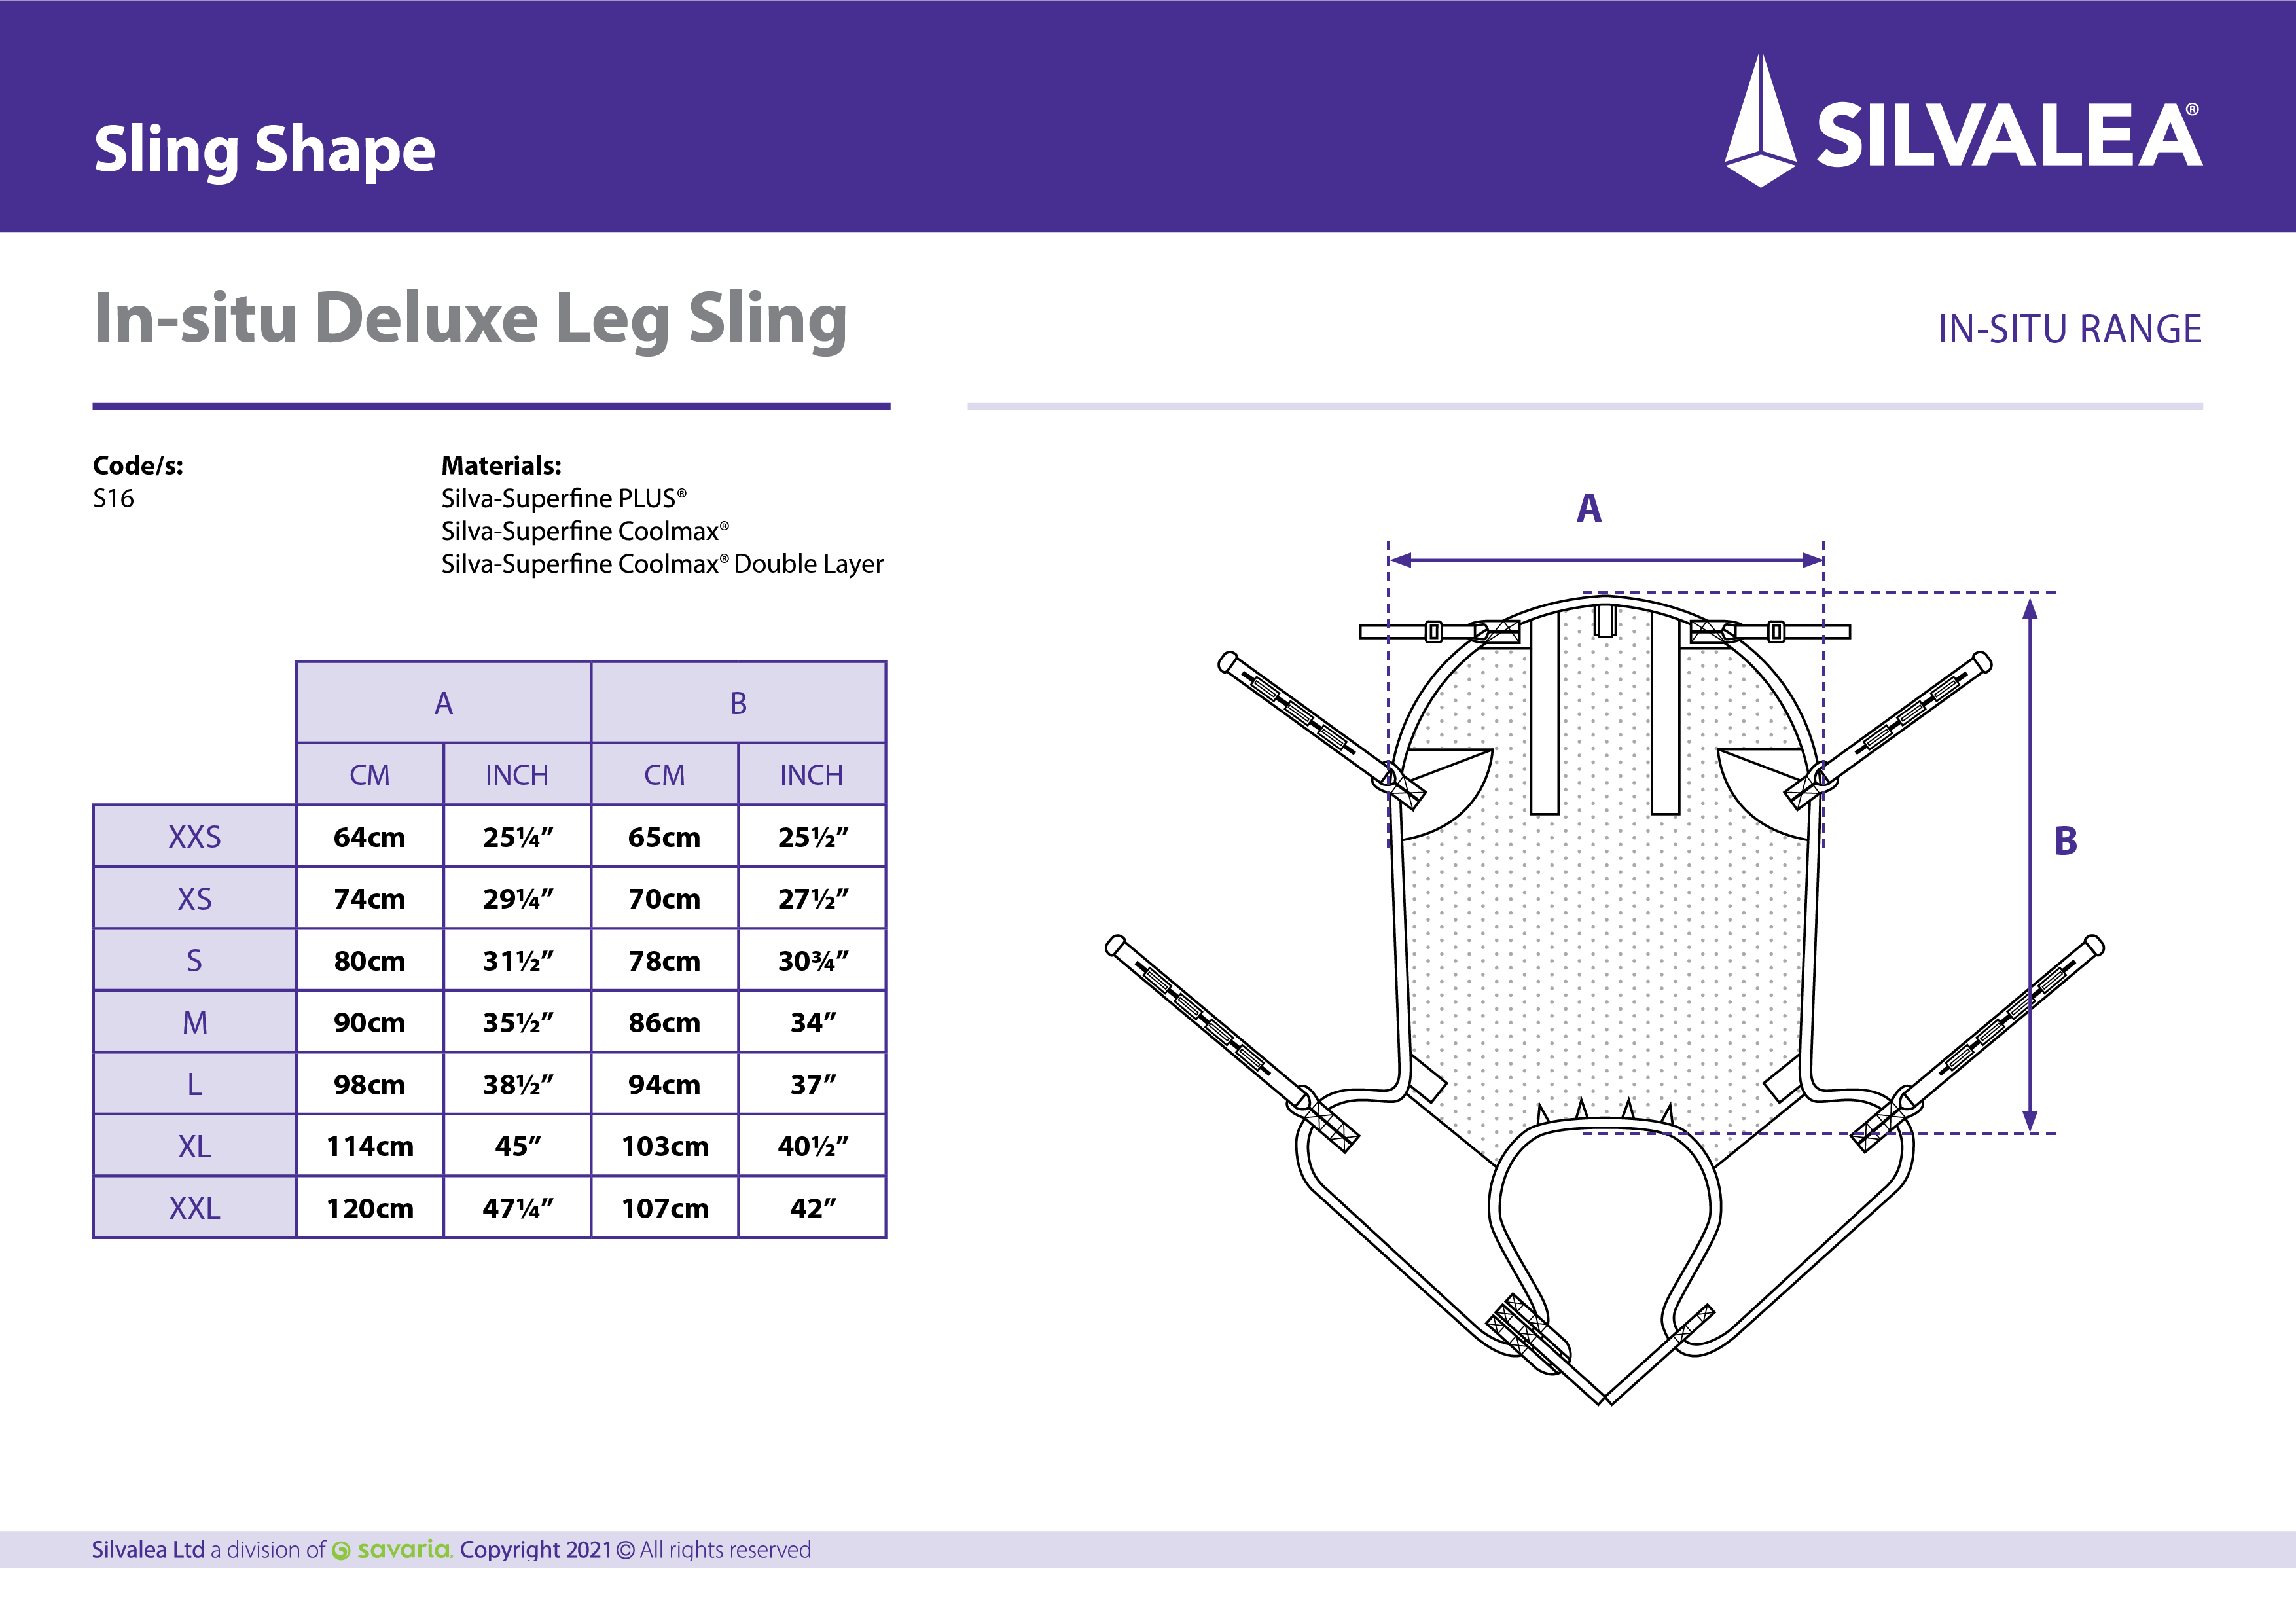 In-situ Deluxe Leg Sling Shape Guide